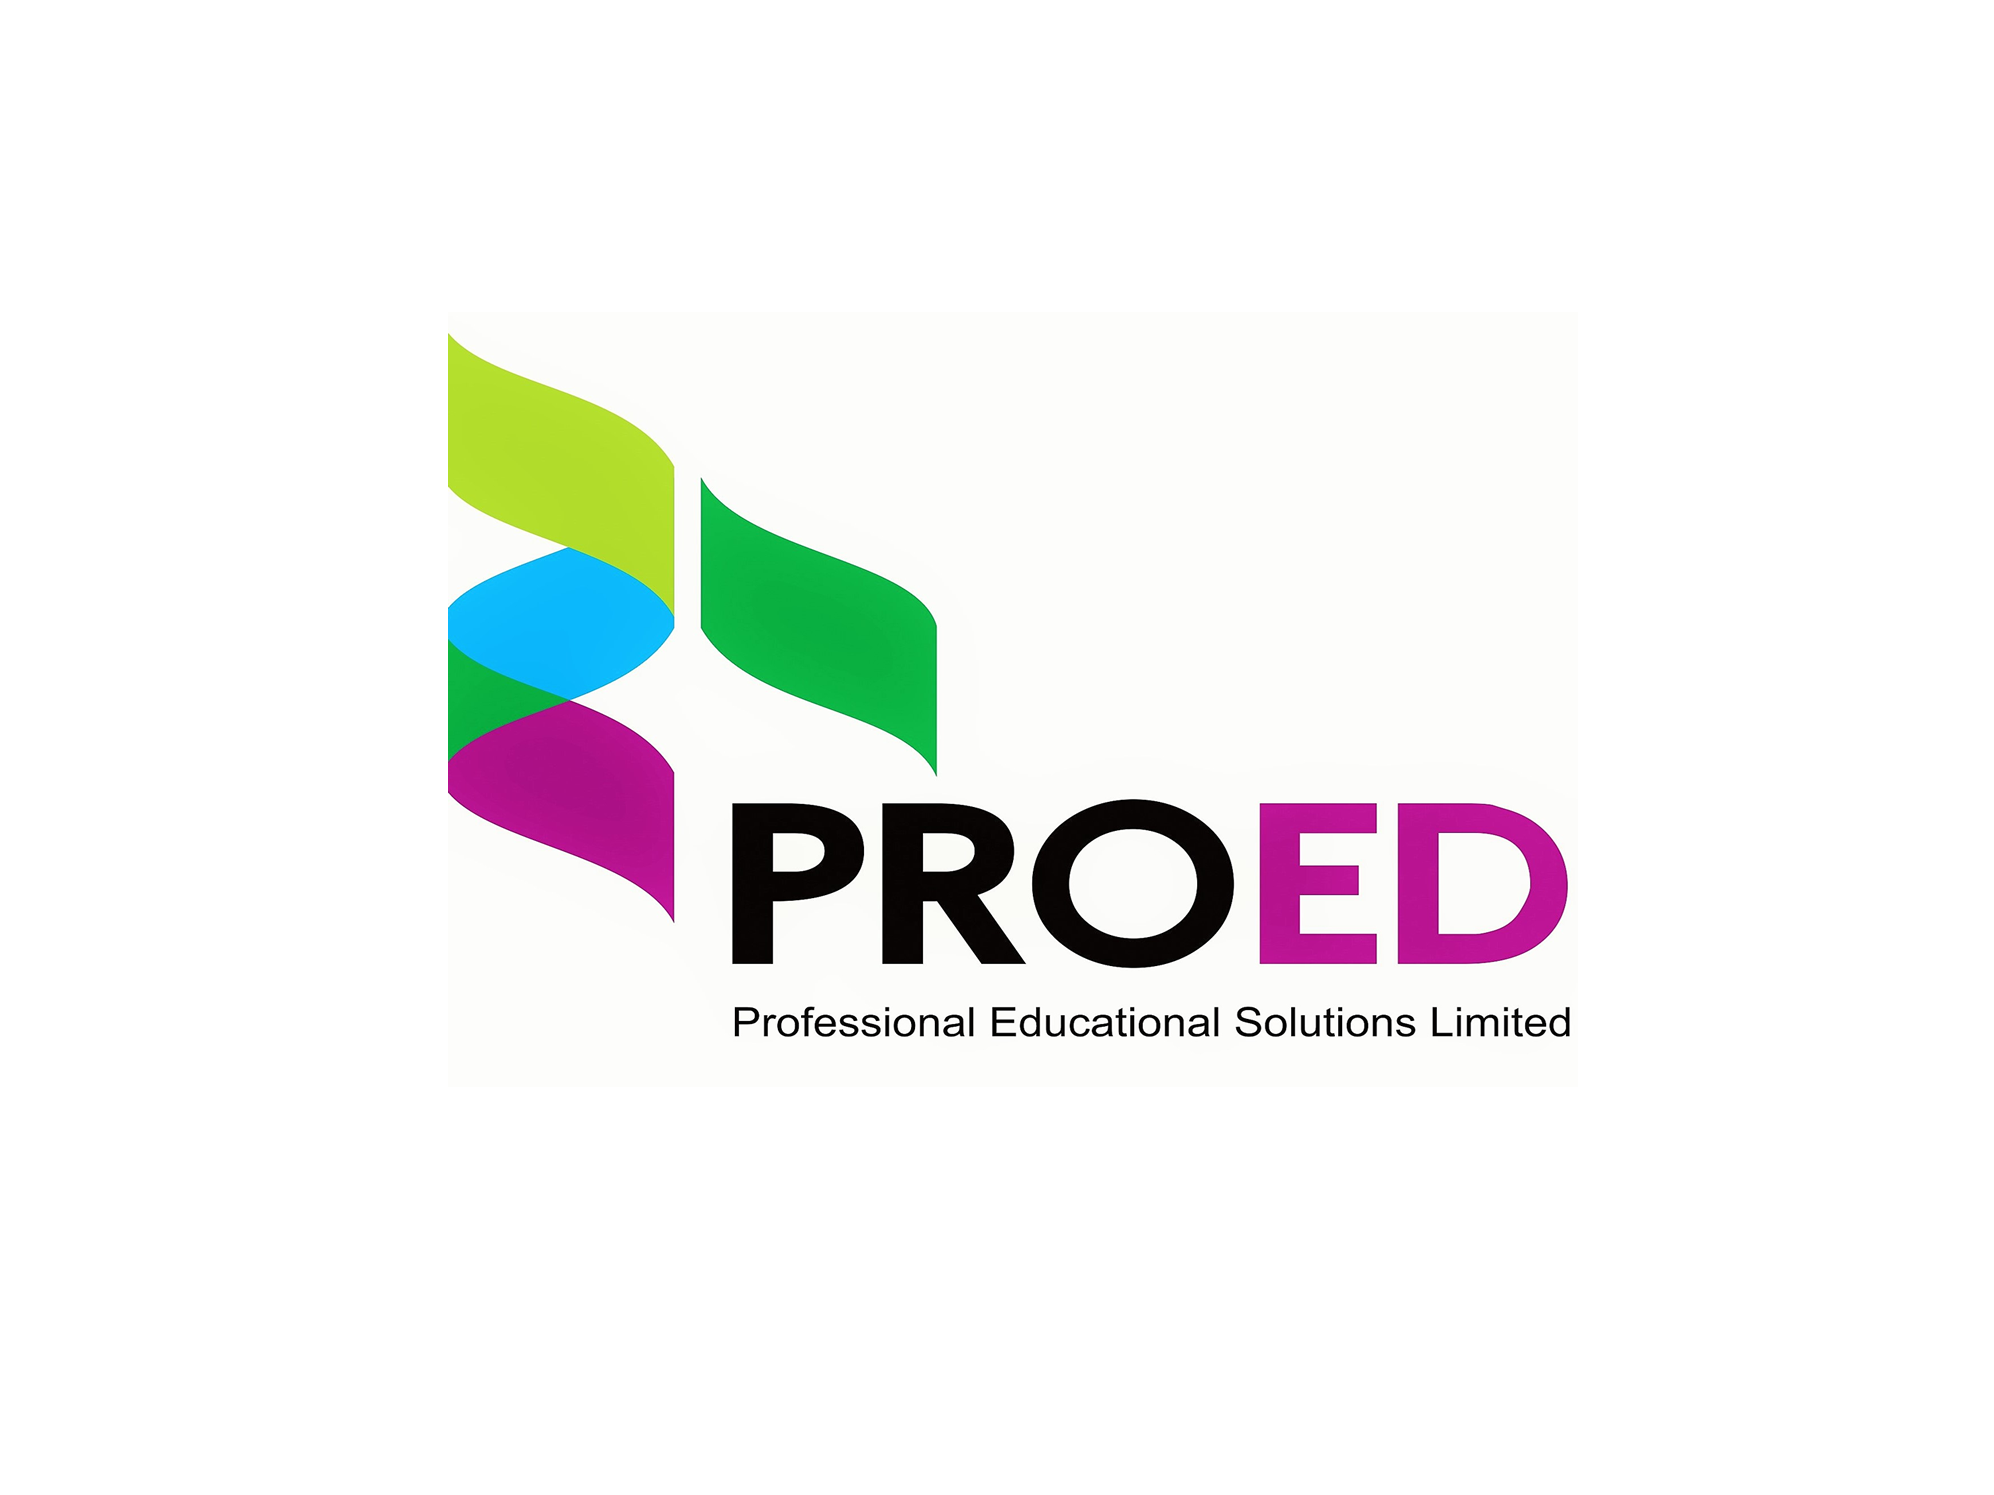 Professional Educational Solutions Ltd	